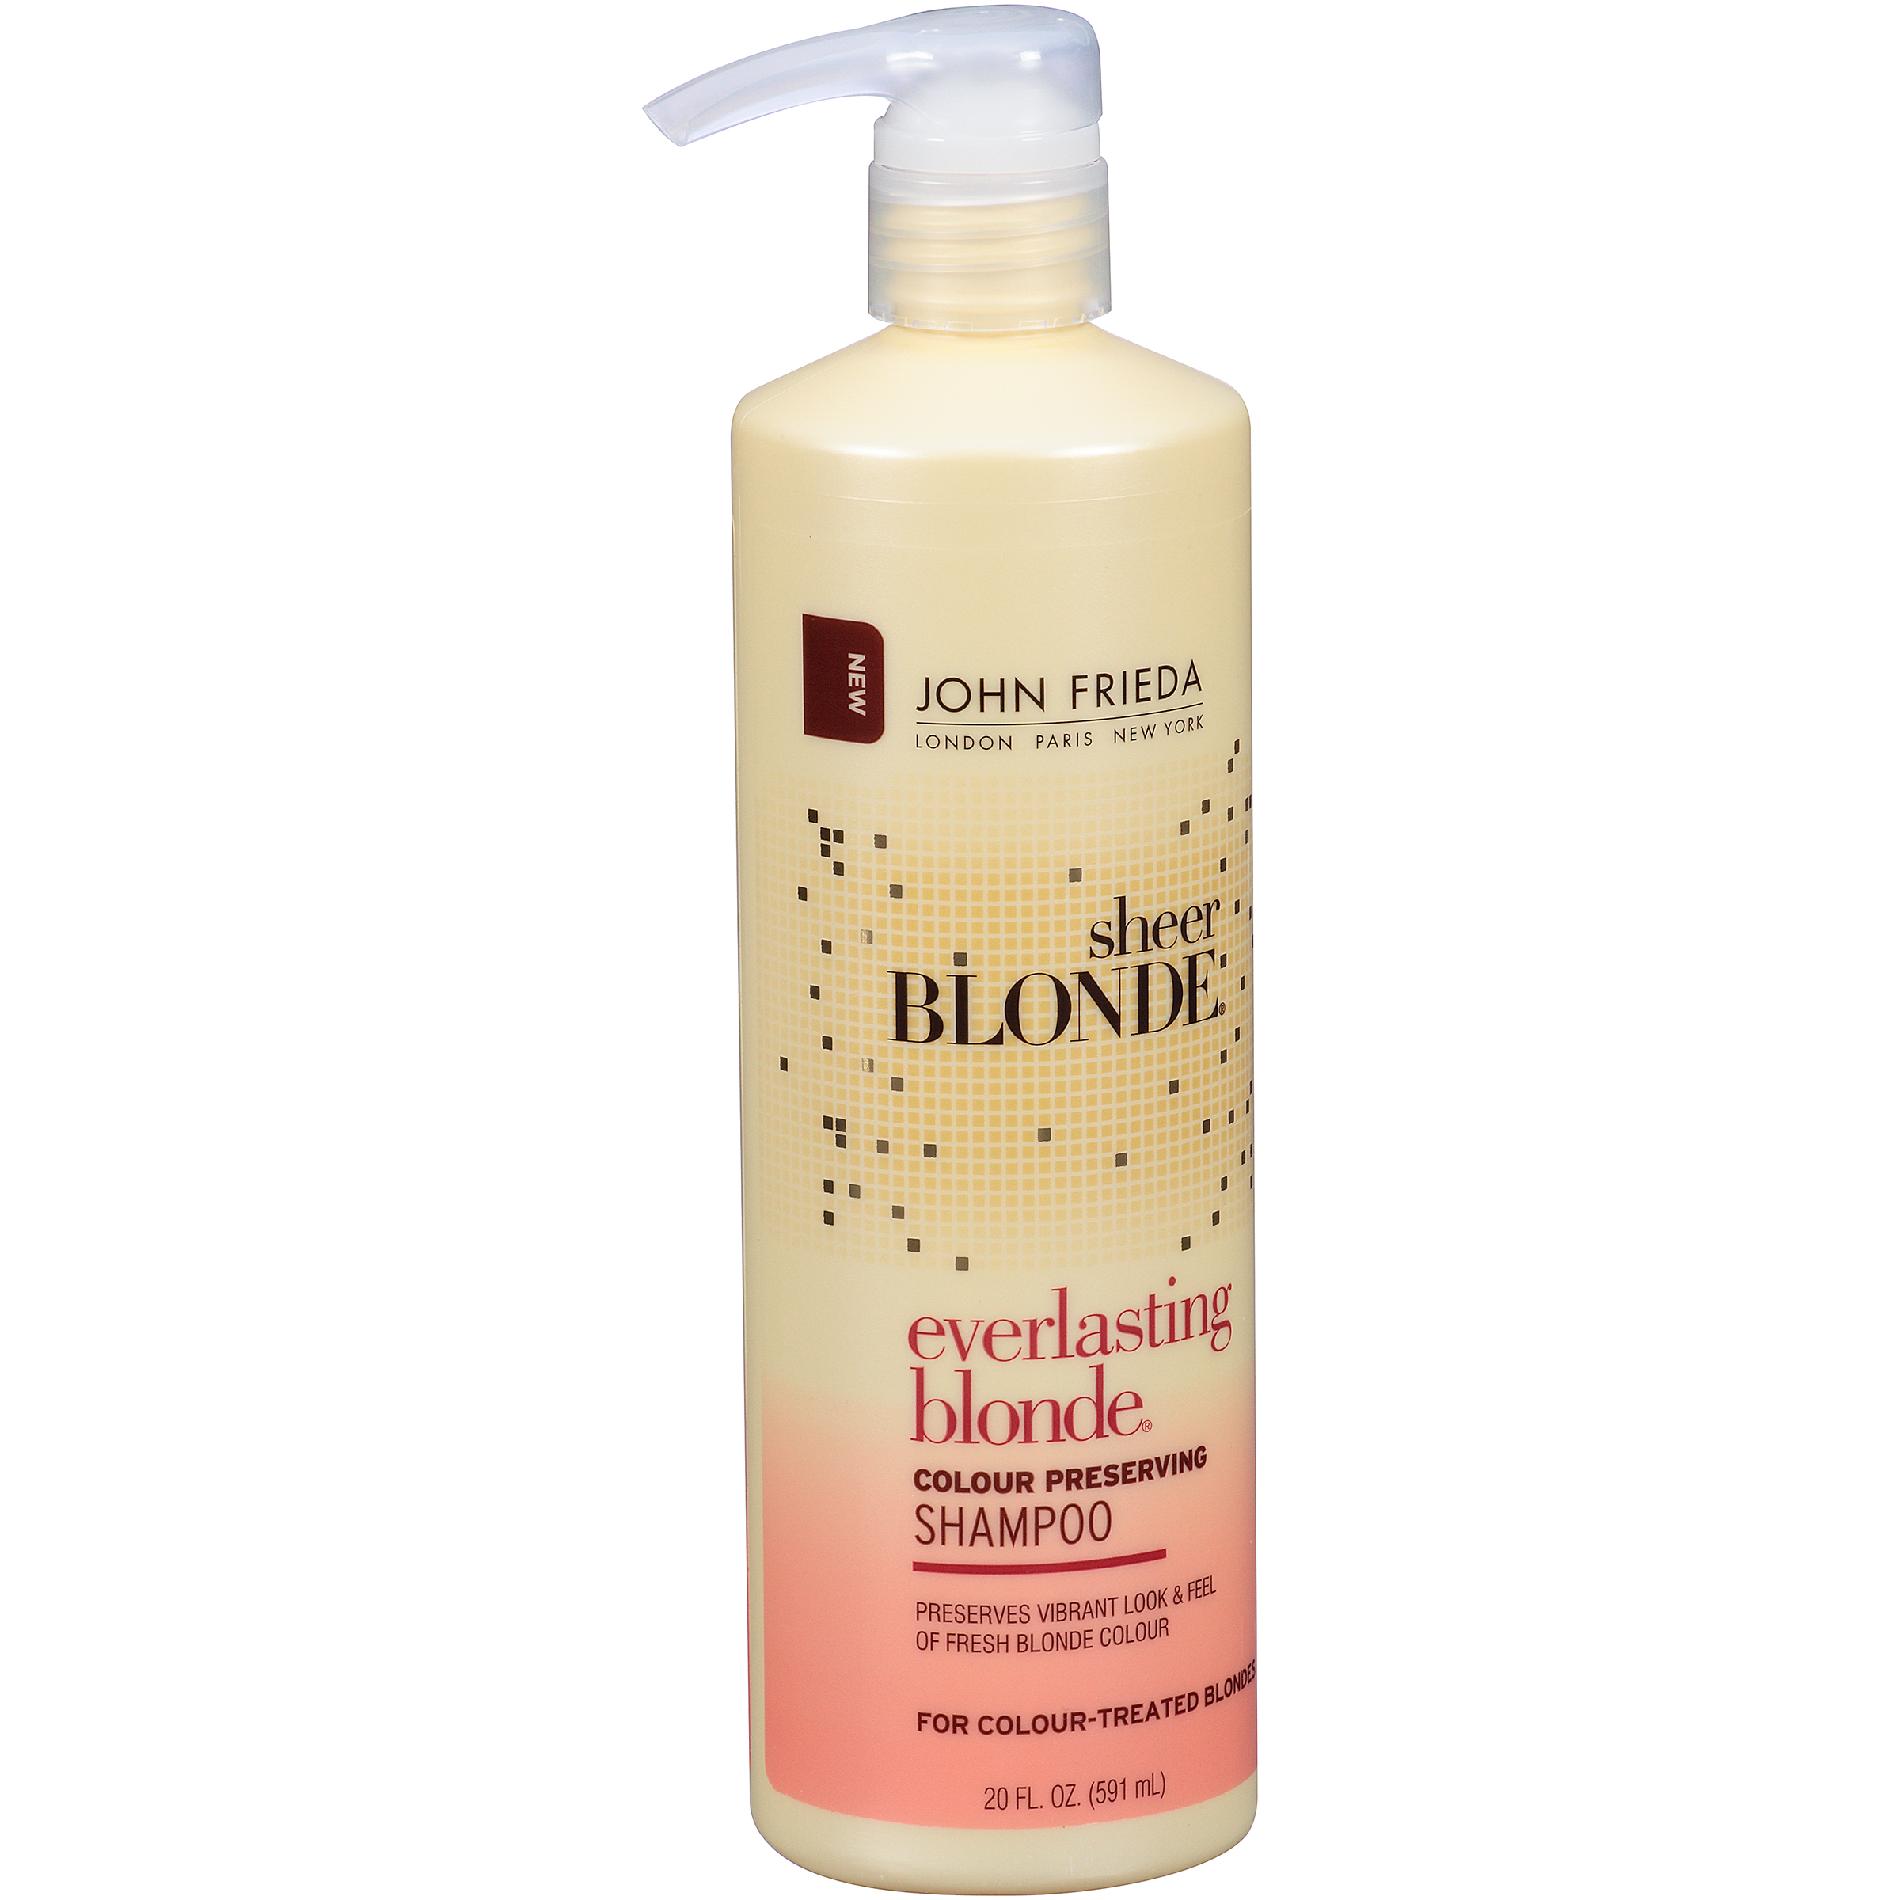 John Frieda Shampoo, Sheer Blonde Everlasting Blonde, 20 fl oz (591 ml)